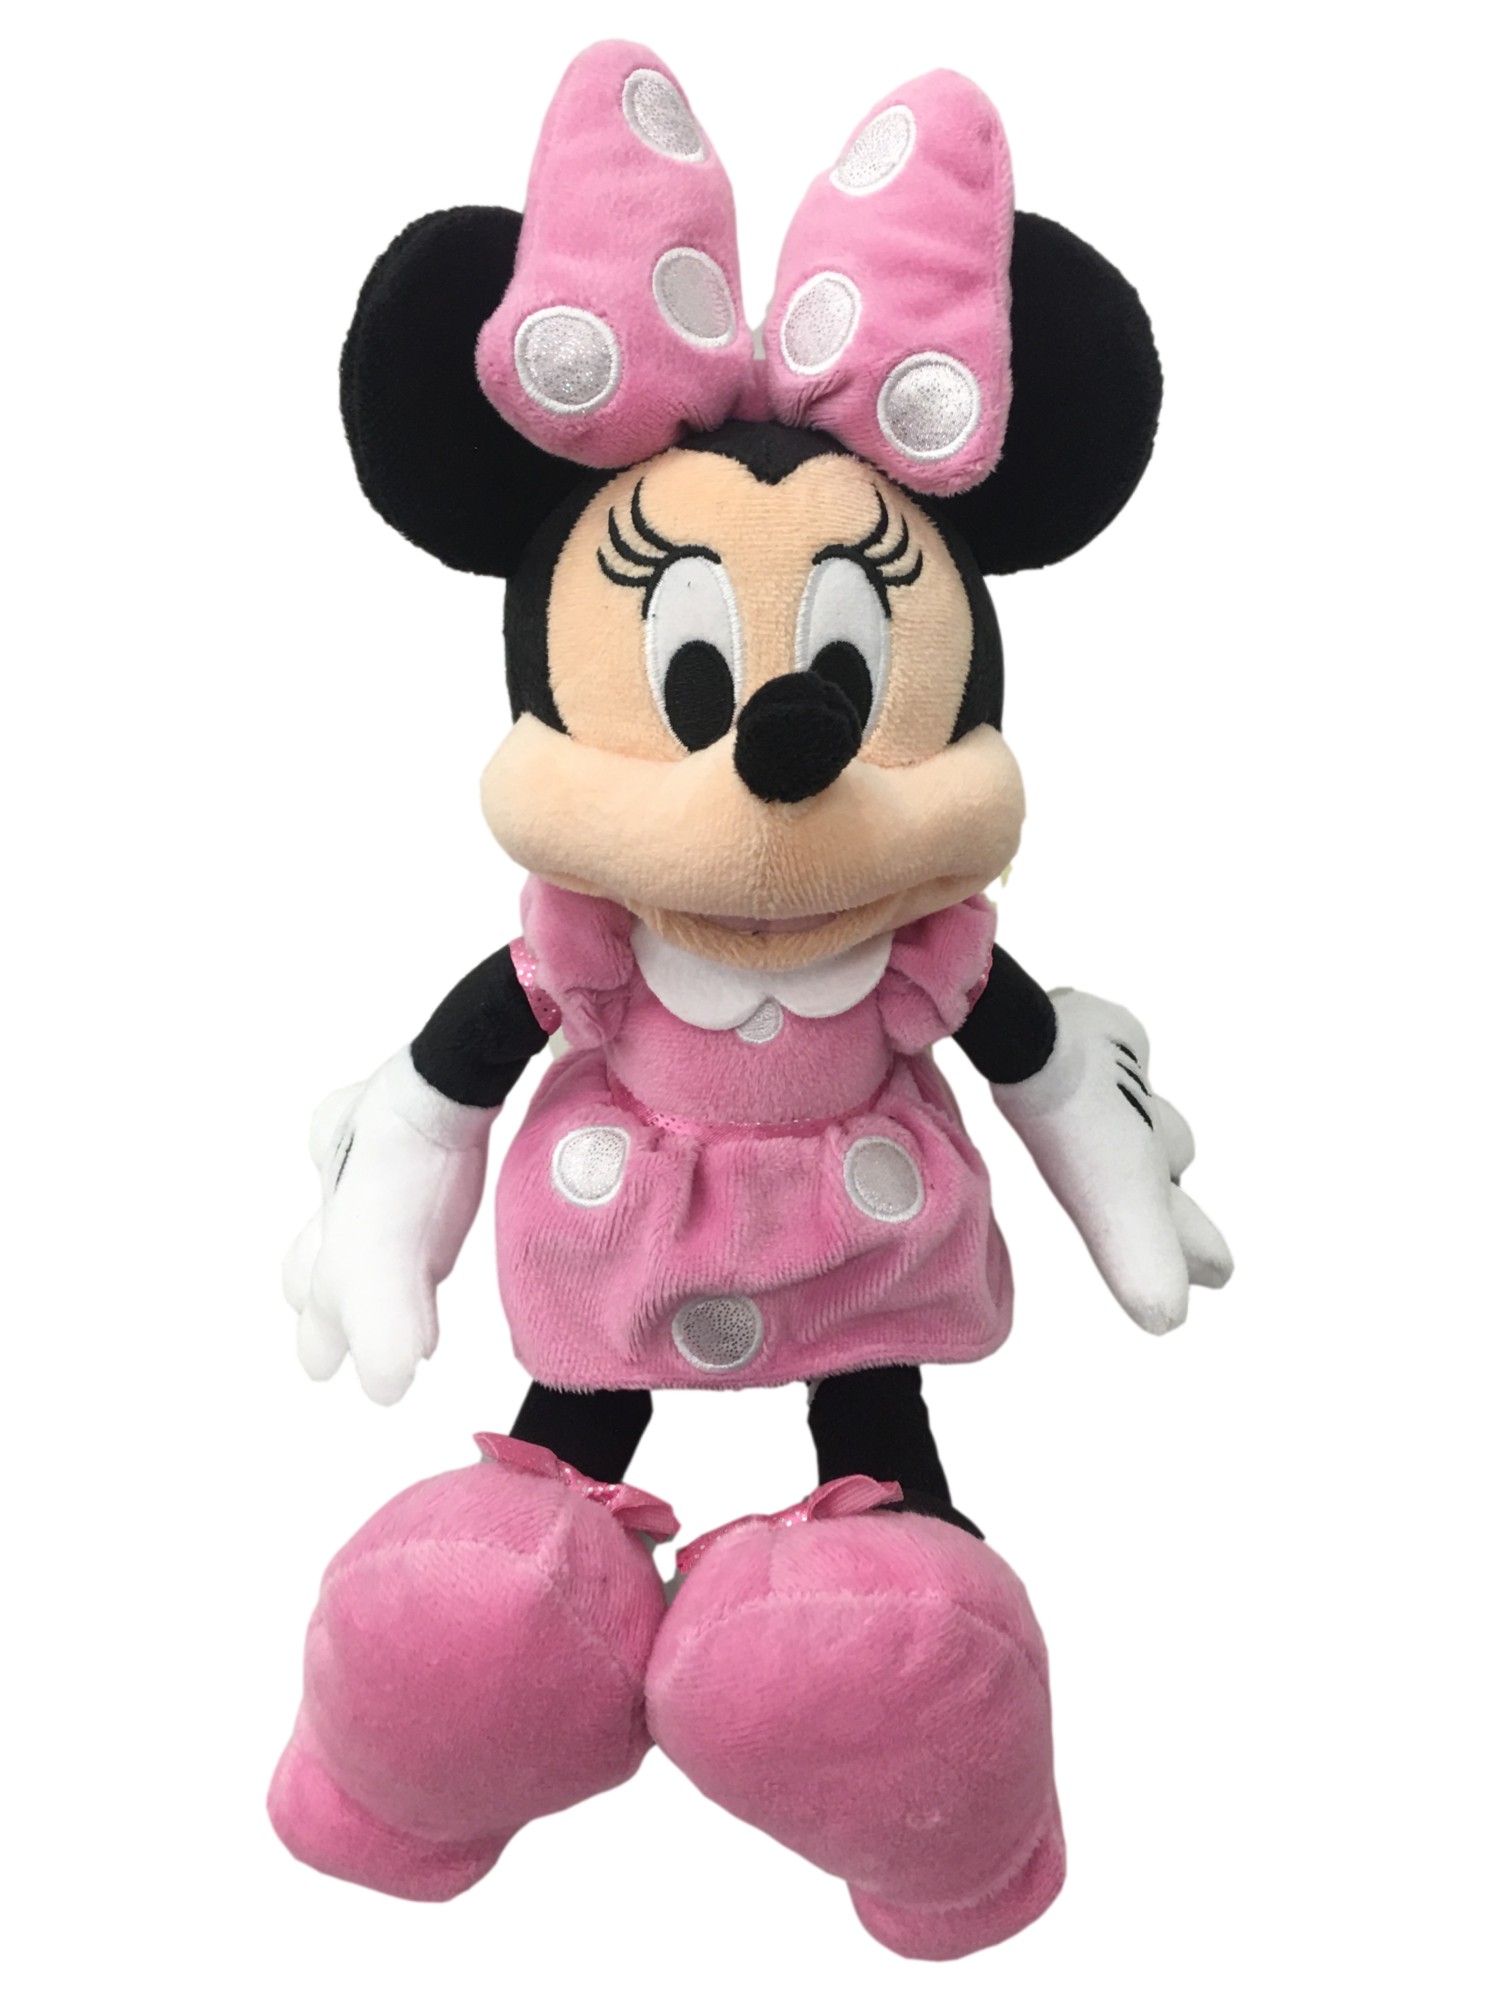 Disney Minnie Mouse 14 inch Plush Stuffed Animal Pal, Pink Polka Dot - image 2 of 2